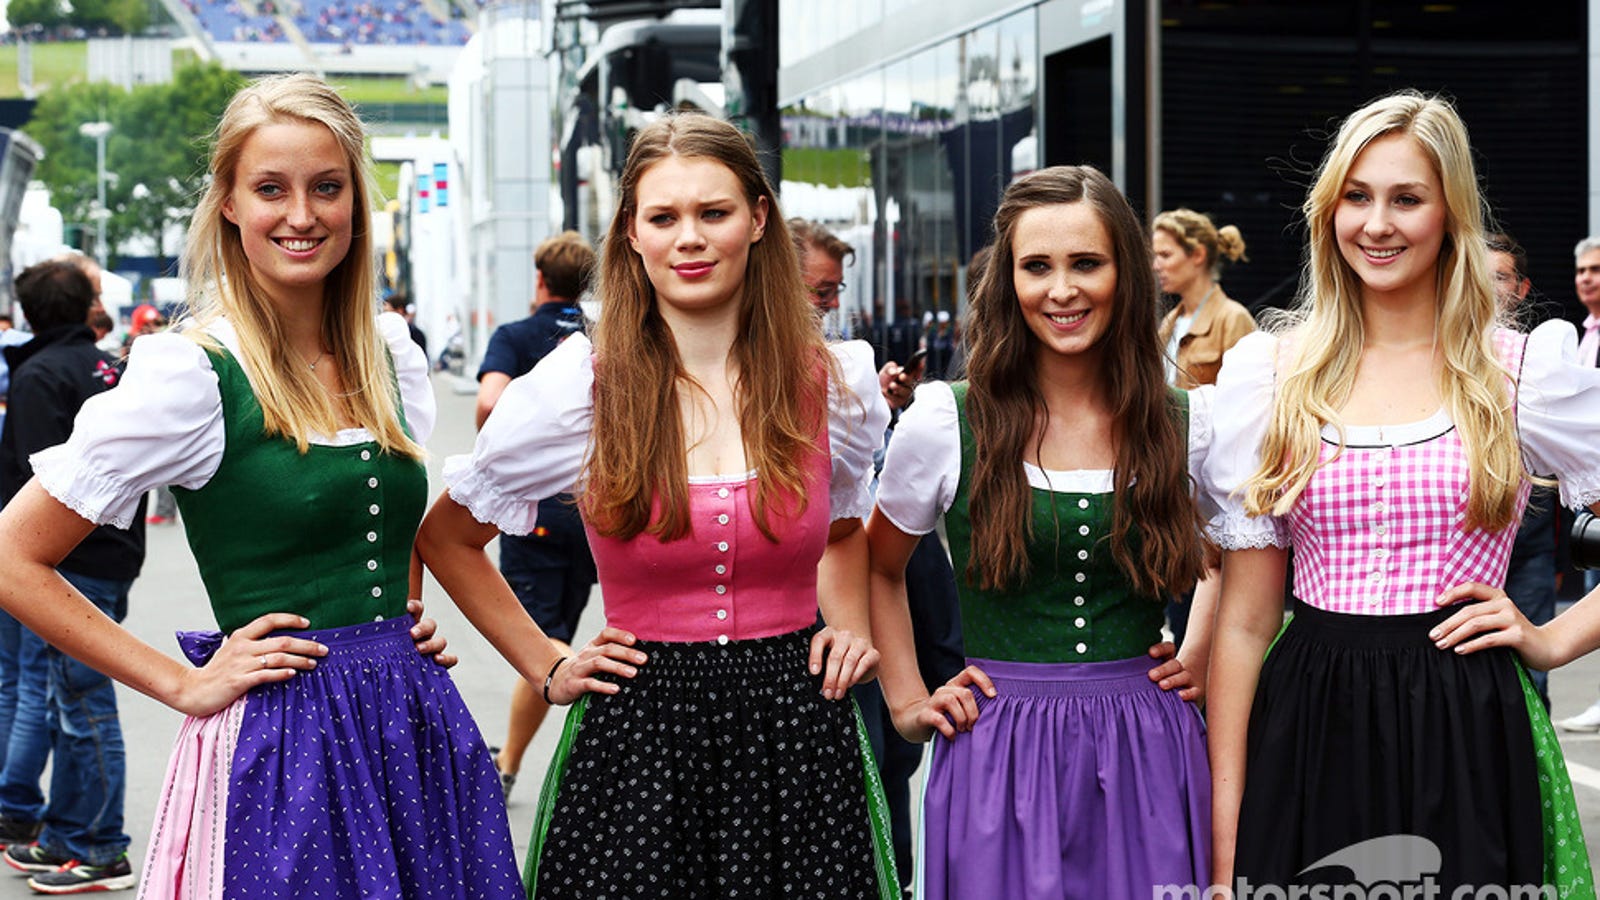 Pretty Austrian girls on Paddock